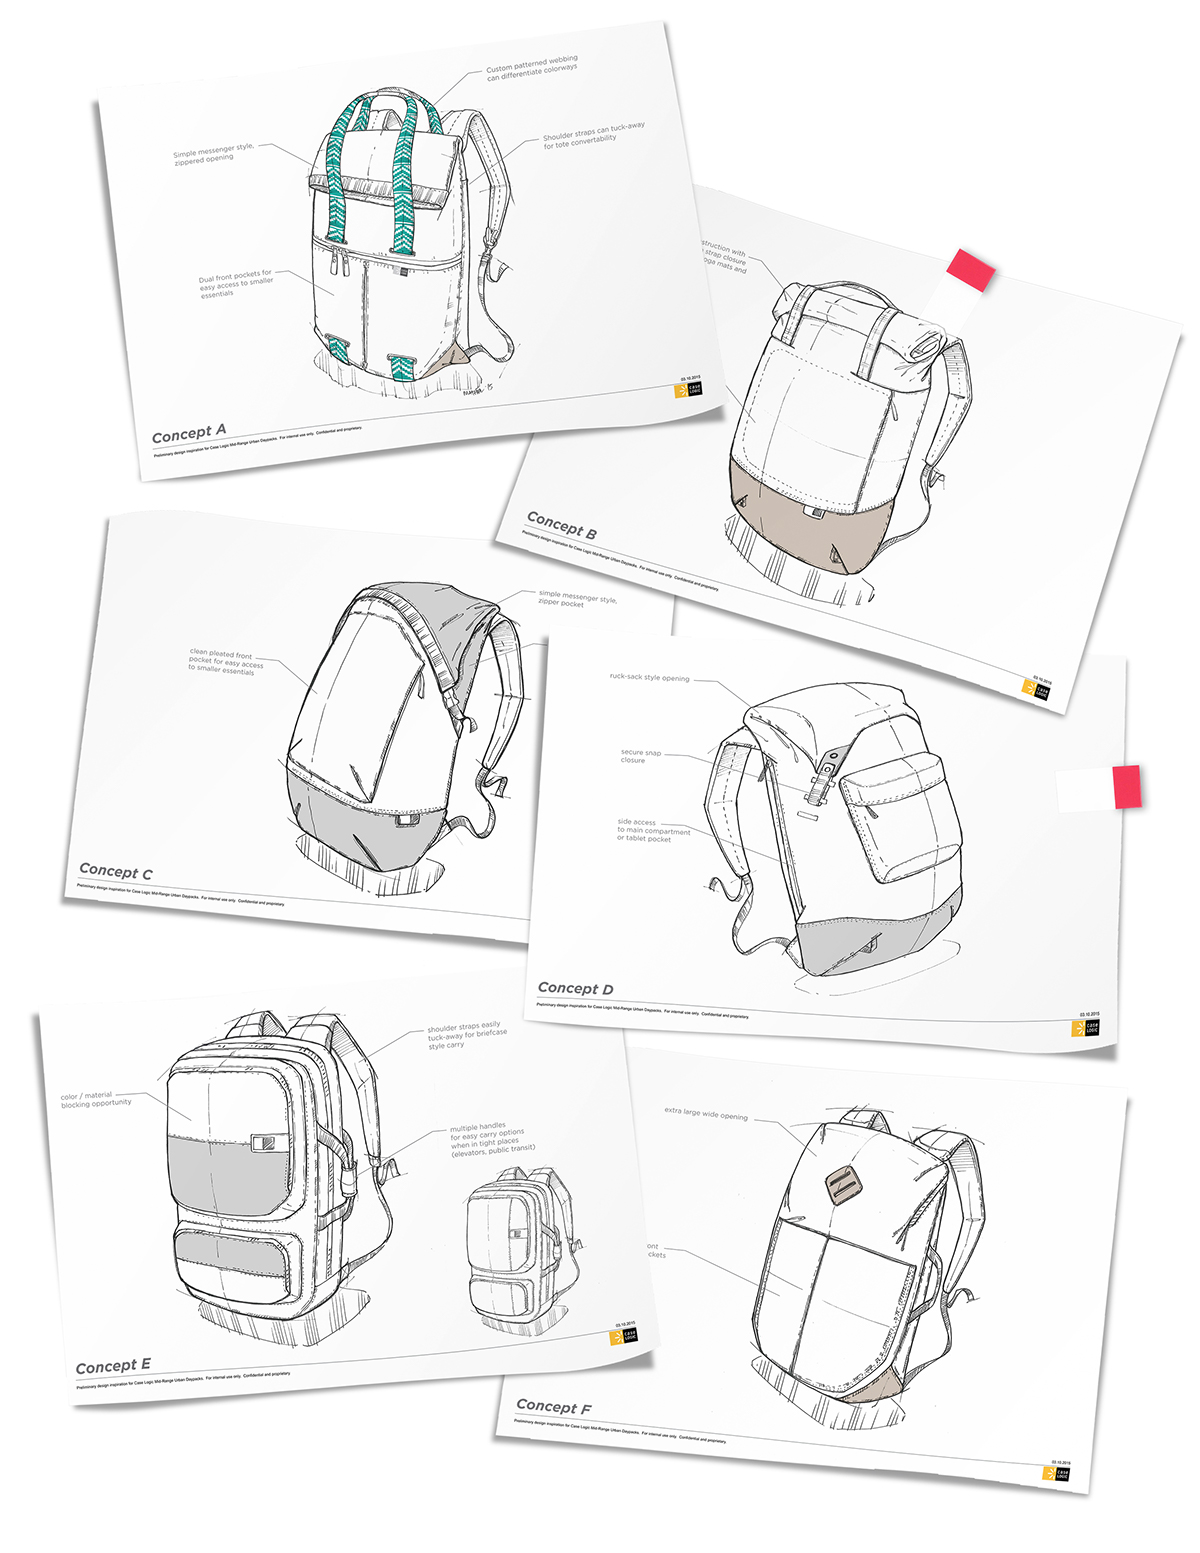 Adobe Portfolio caselogic bag softgoods rolltop Rucksack sketch